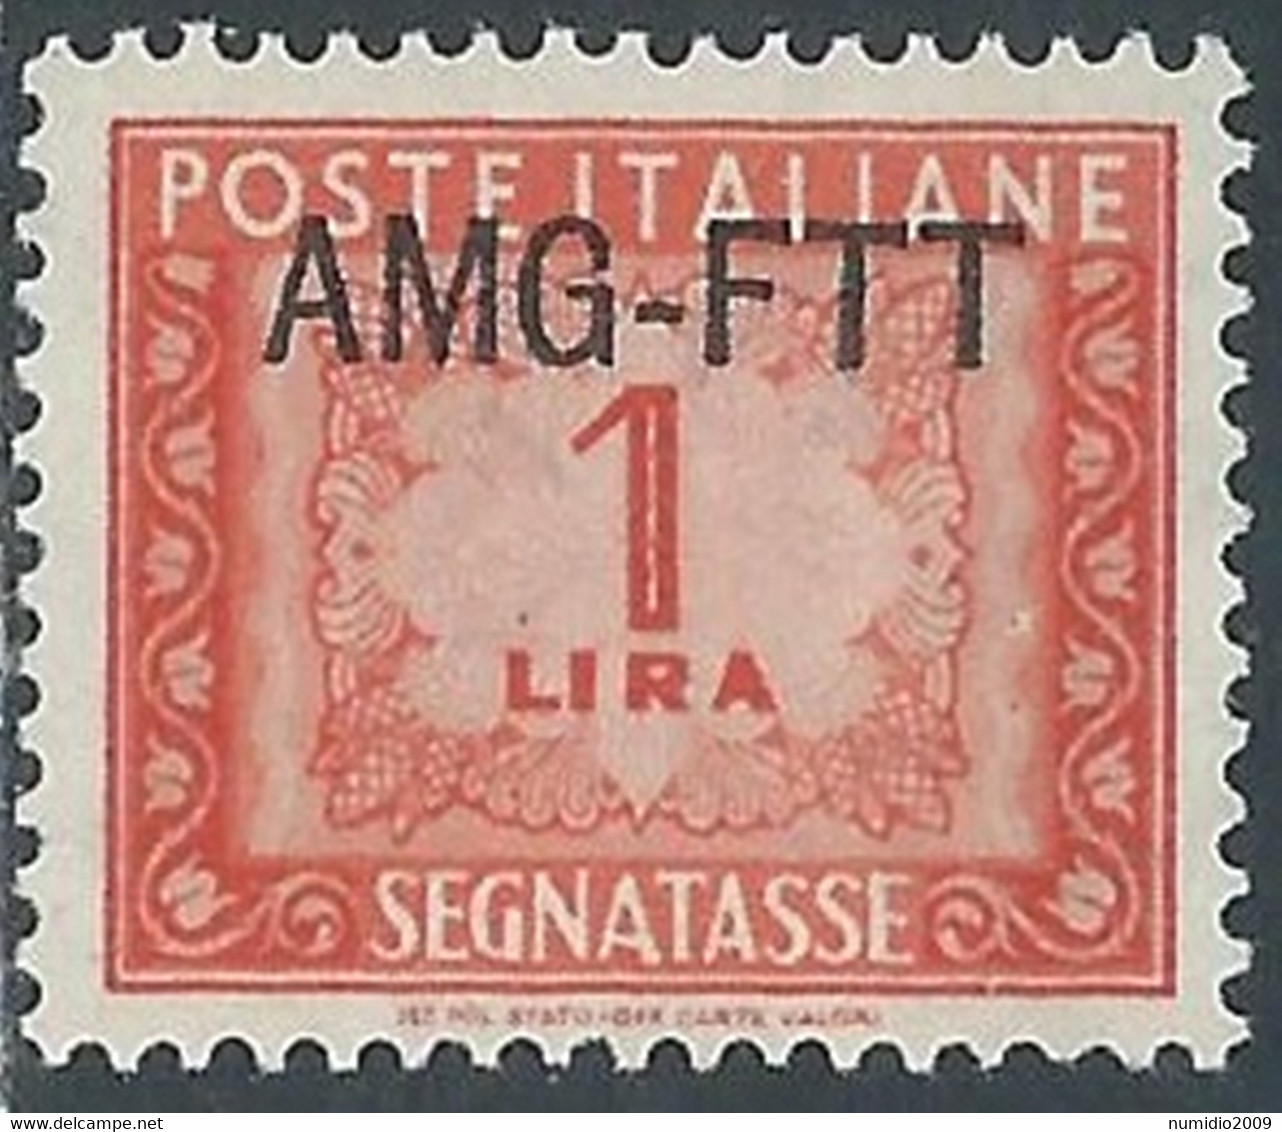 1949-54 TRIESTE A SEGNATASSE 1 LIRA MNH ** - RE8-4 - Segnatasse